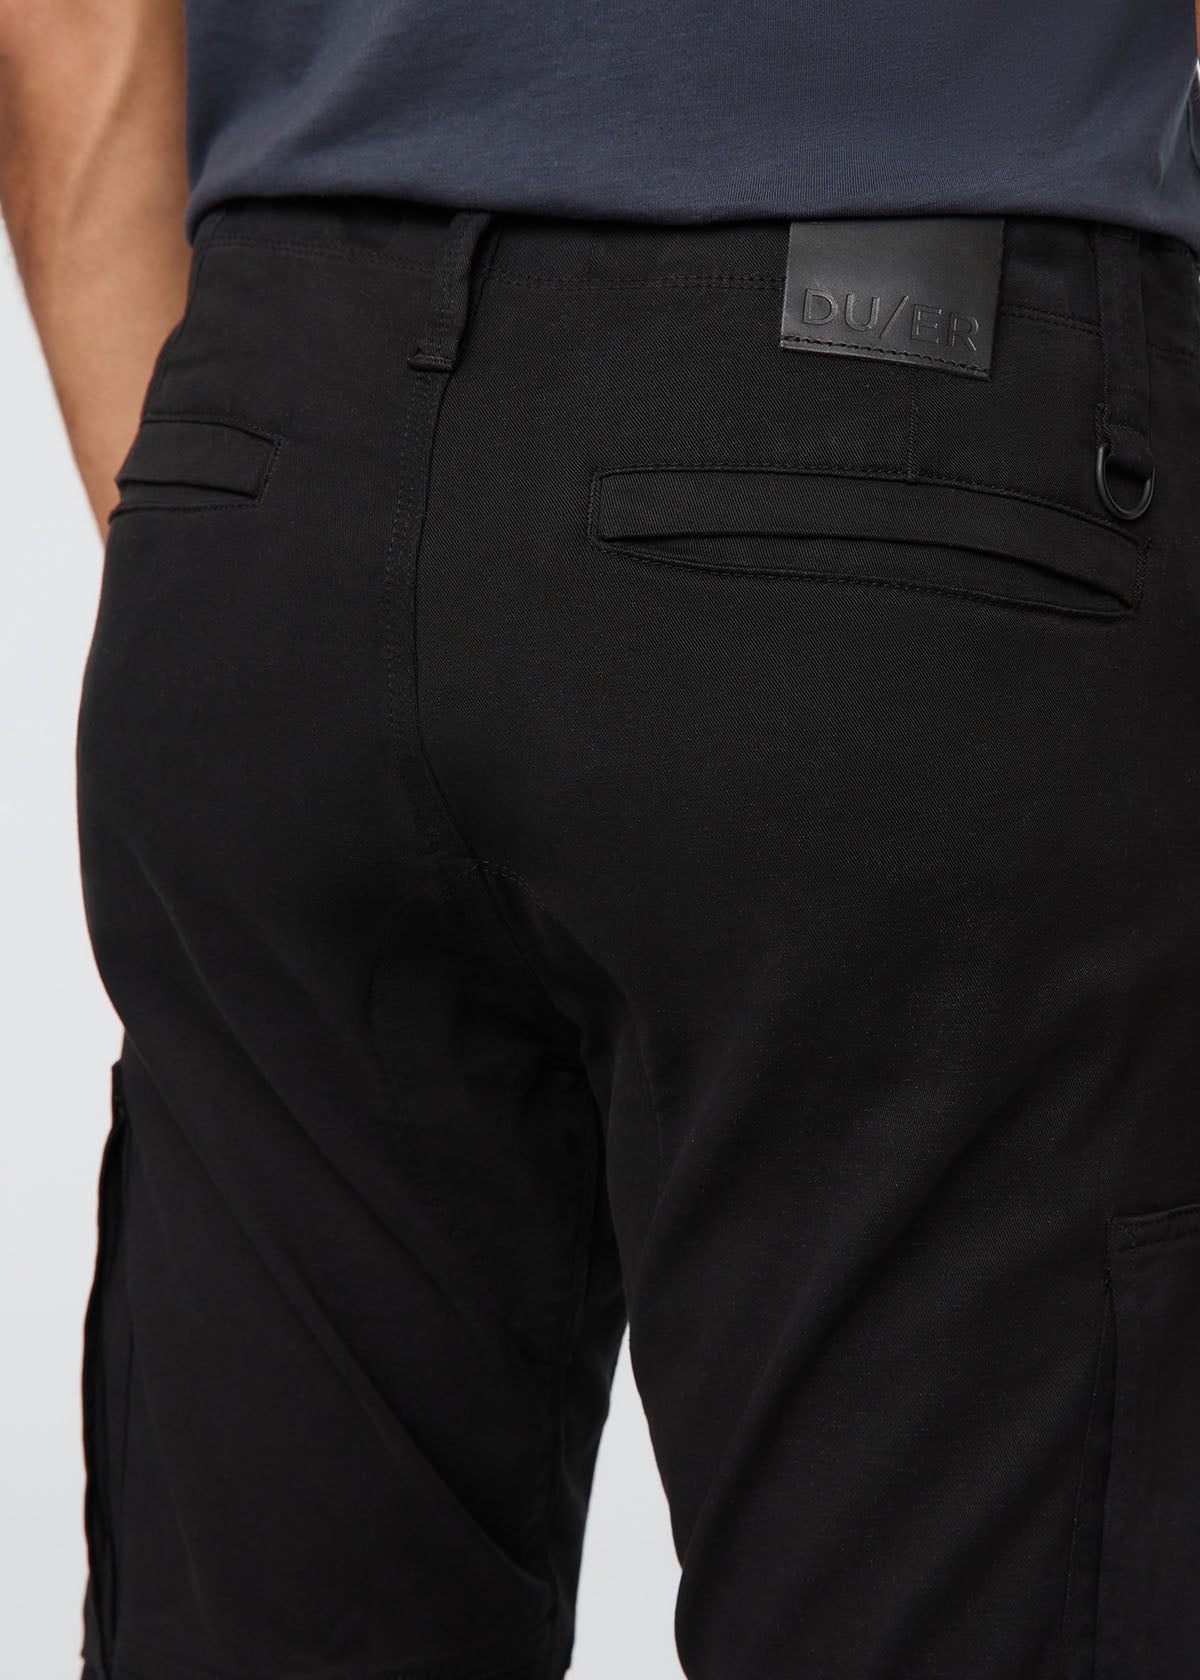 mens black athletic waterproof pant back waistband and pocket